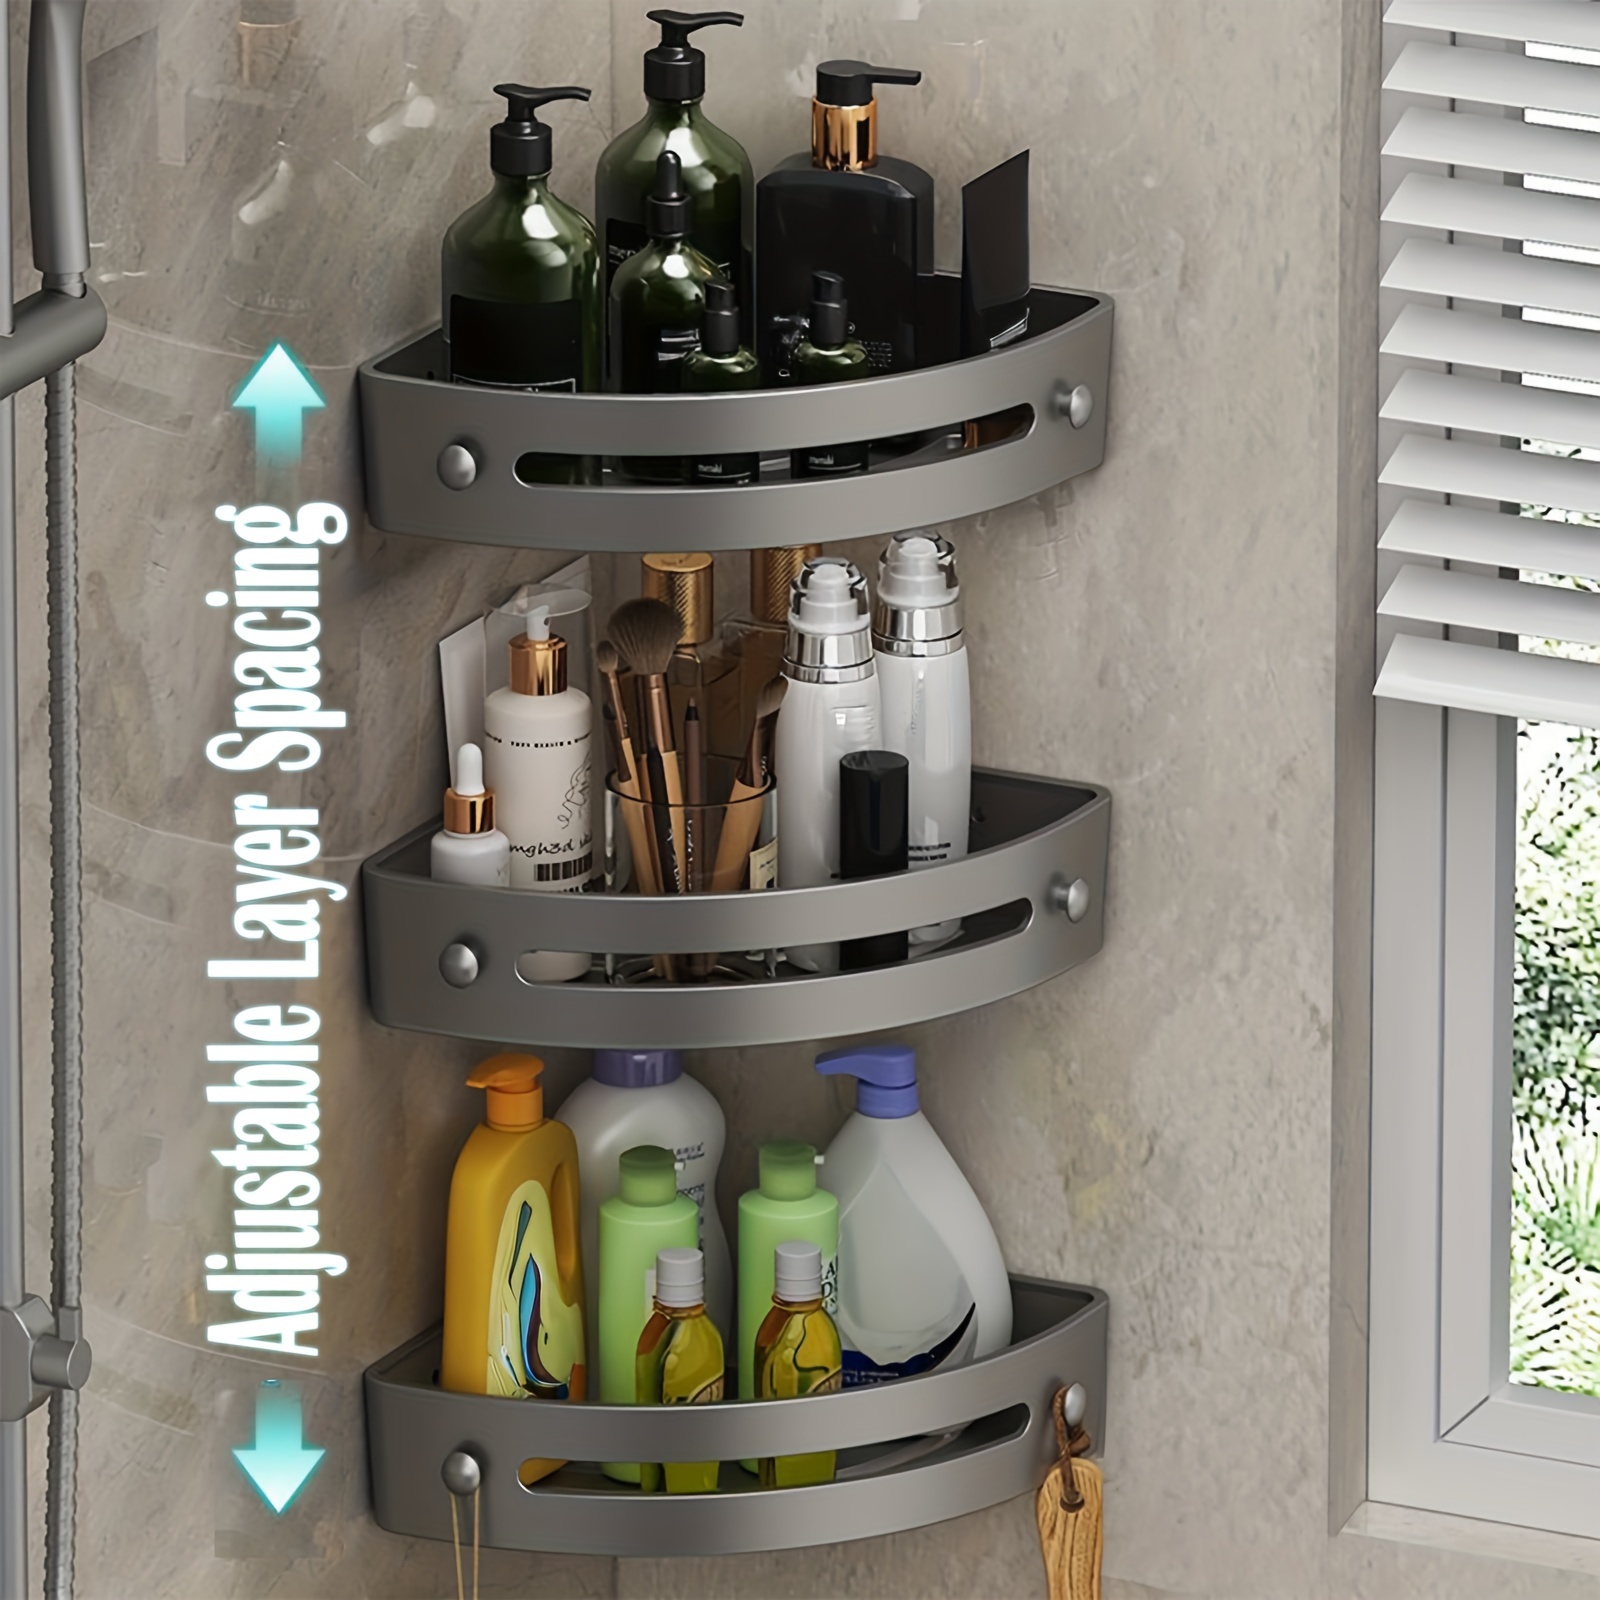 Suction Cup Shower Caddy Bathroom Shower Shelf Storage Basket Wall